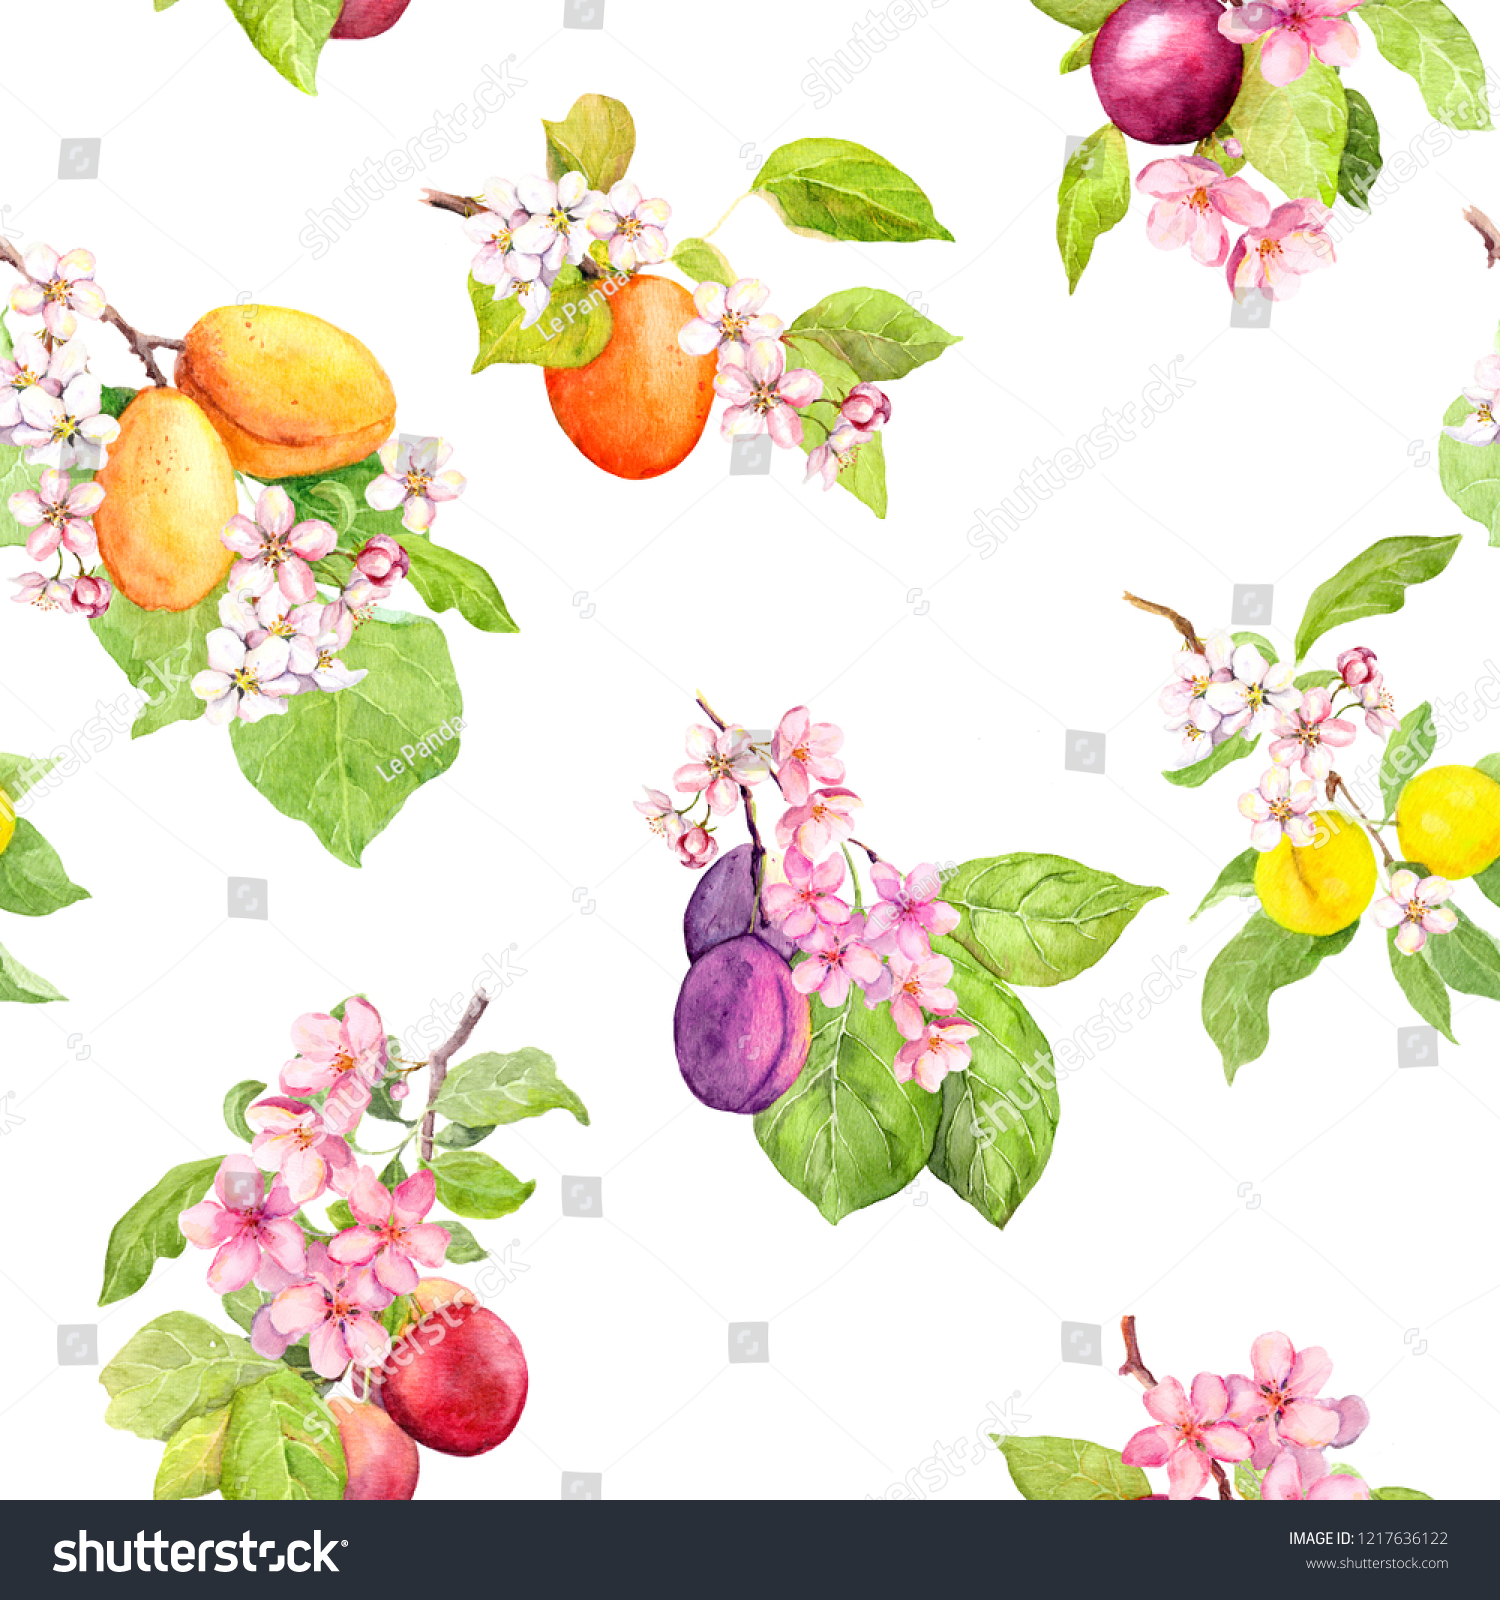 Fruits Summer Garden Plum Cherry Apple Stock Illustration 1217636122